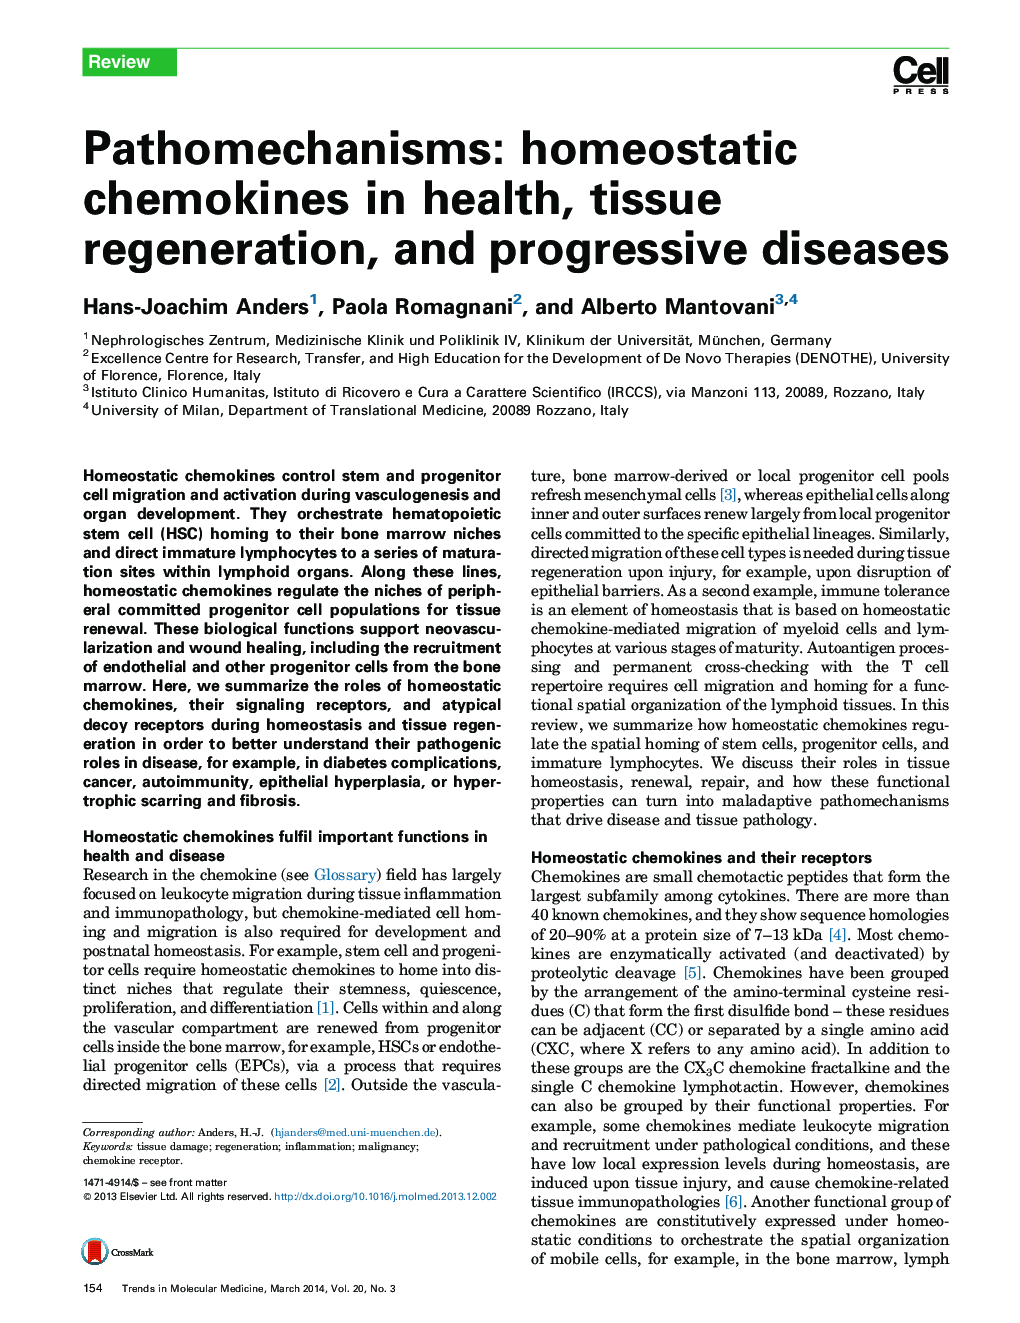 Pathomechanisms: homeostatic chemokines in health, tissue regeneration, and progressive diseases